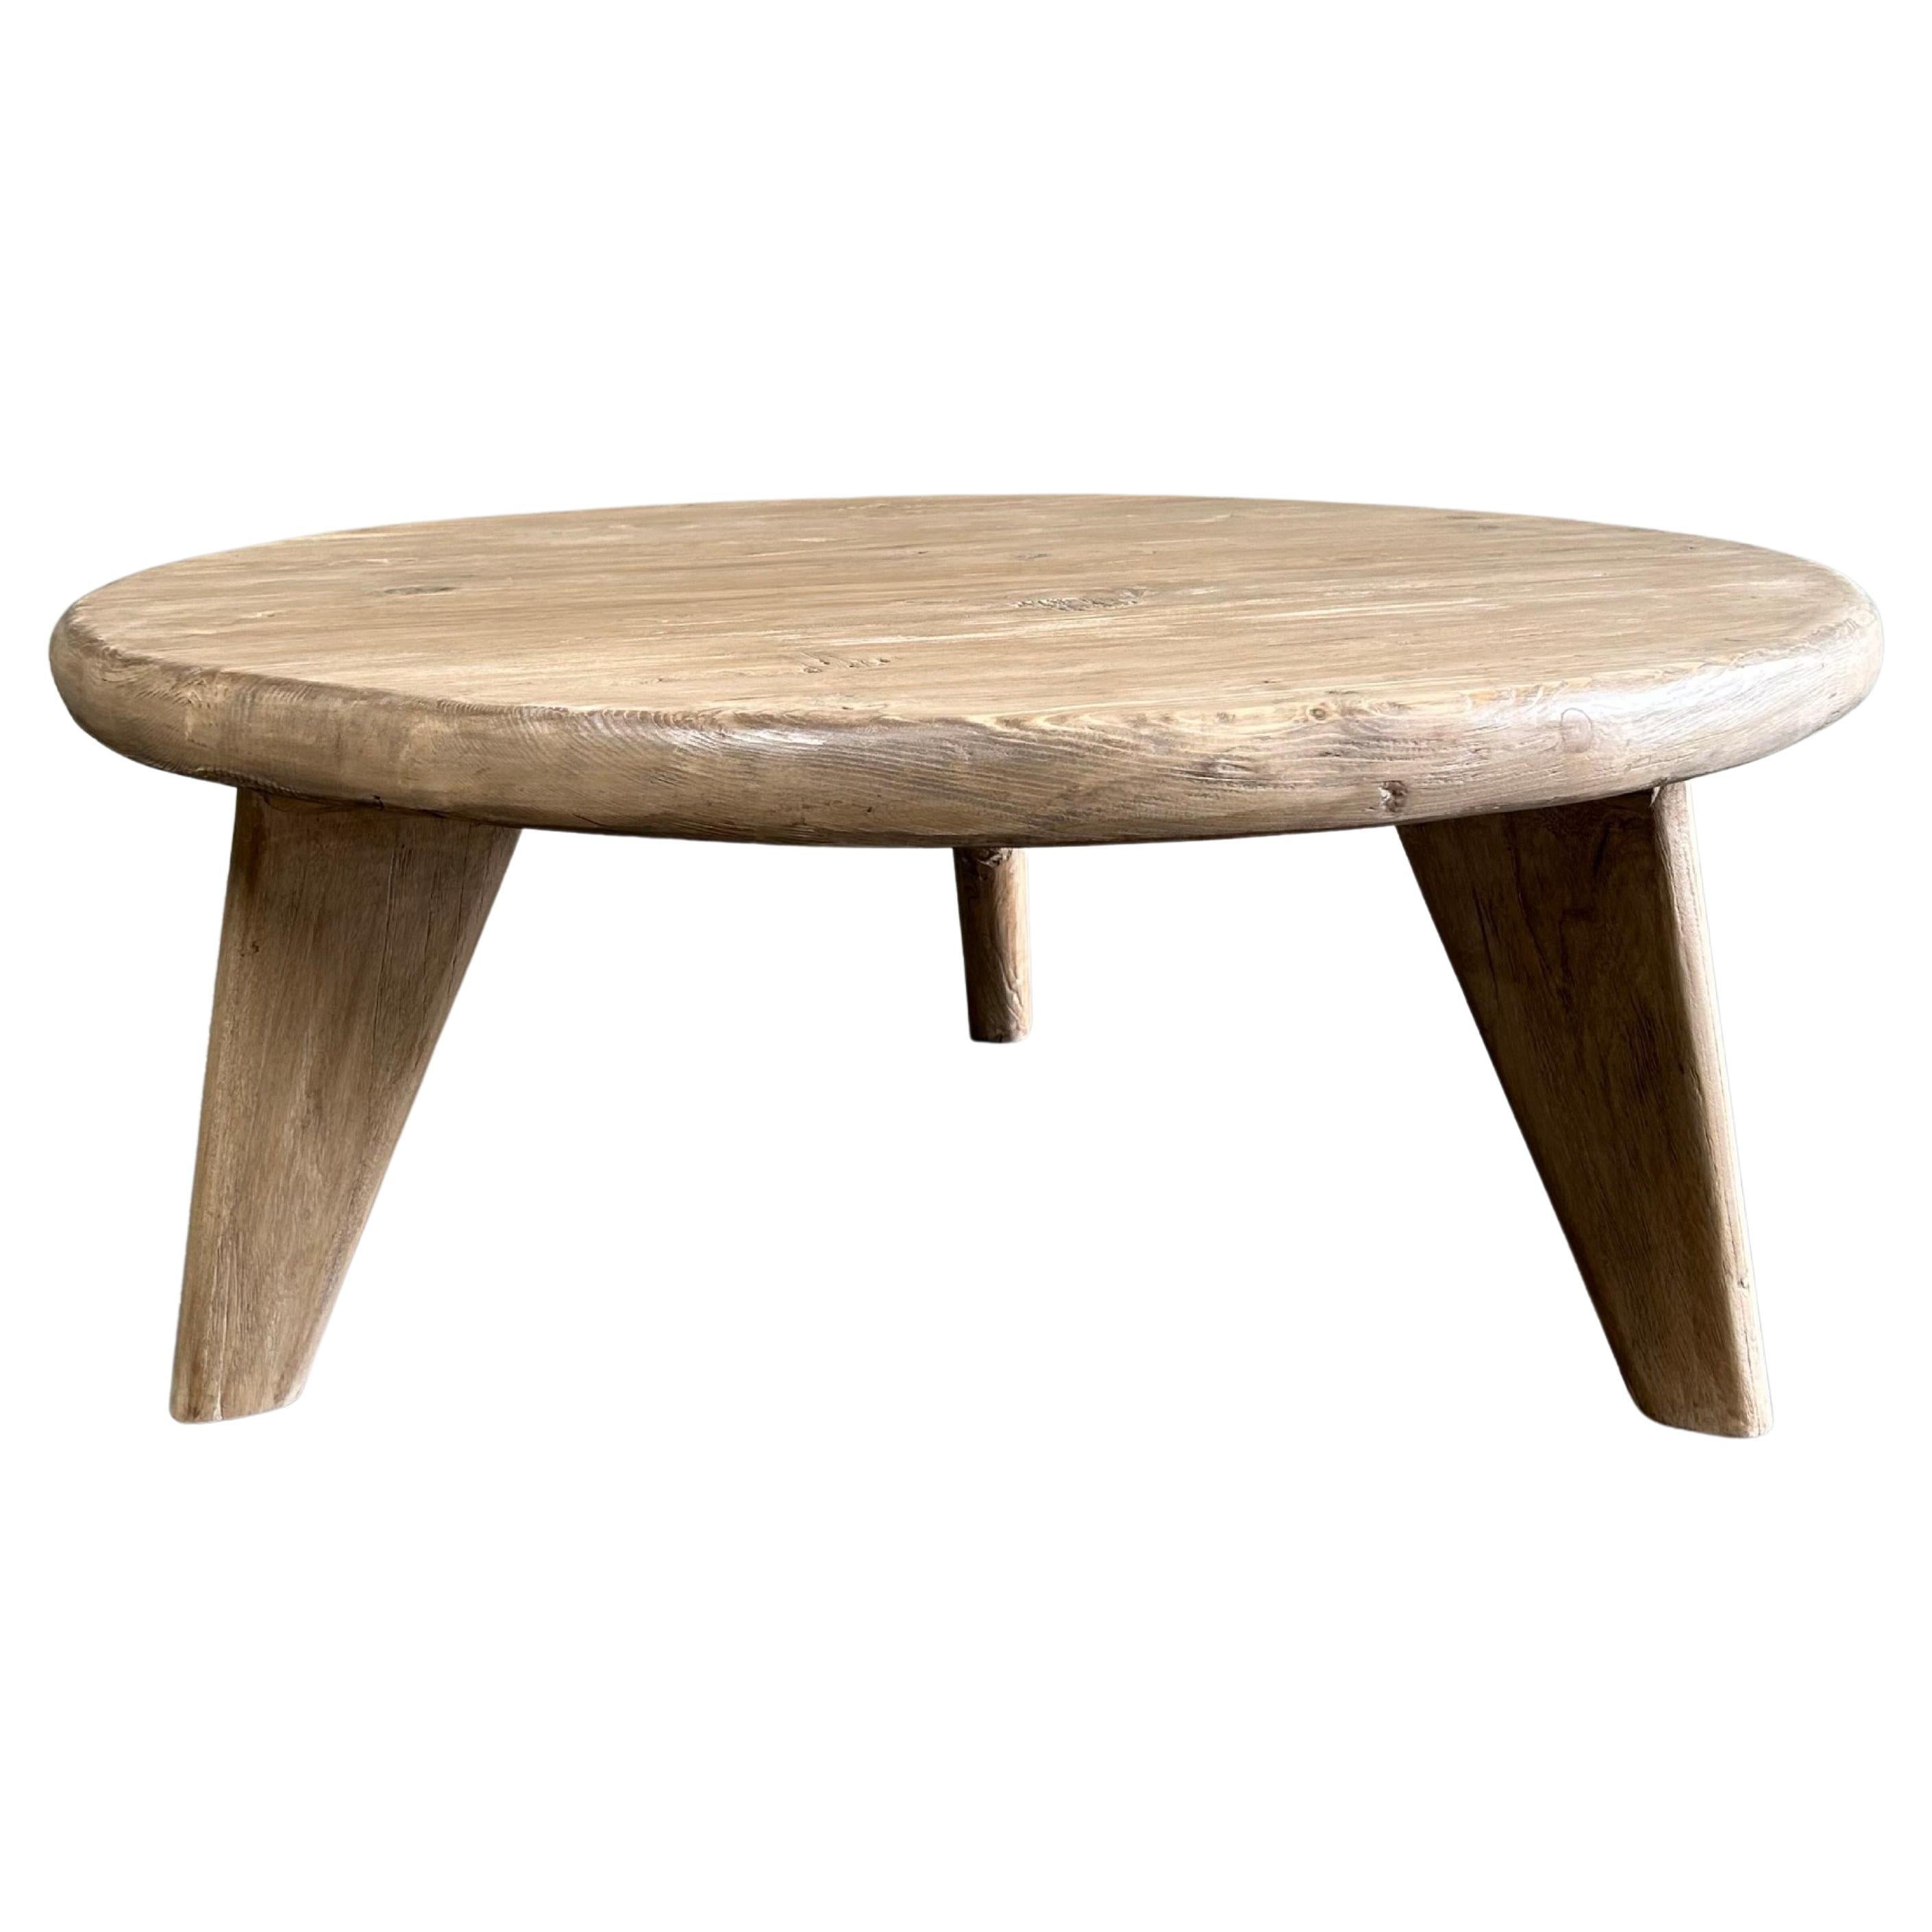 Custom Reclaimed Elm Wood Round Coffee Table with 3 Legs